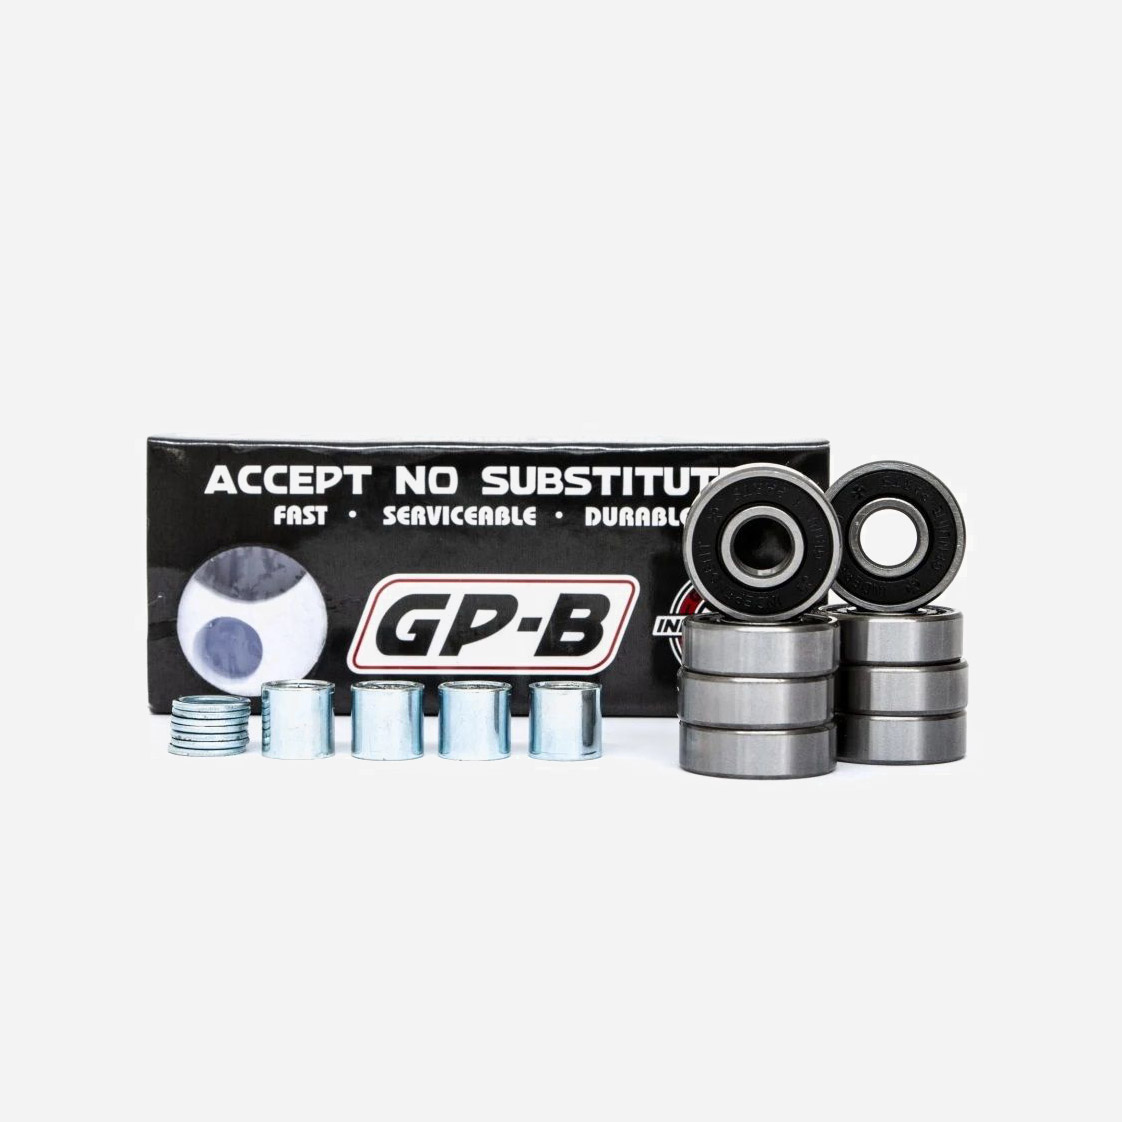 Independent Genuine Parts Bearings GP-B - Silver